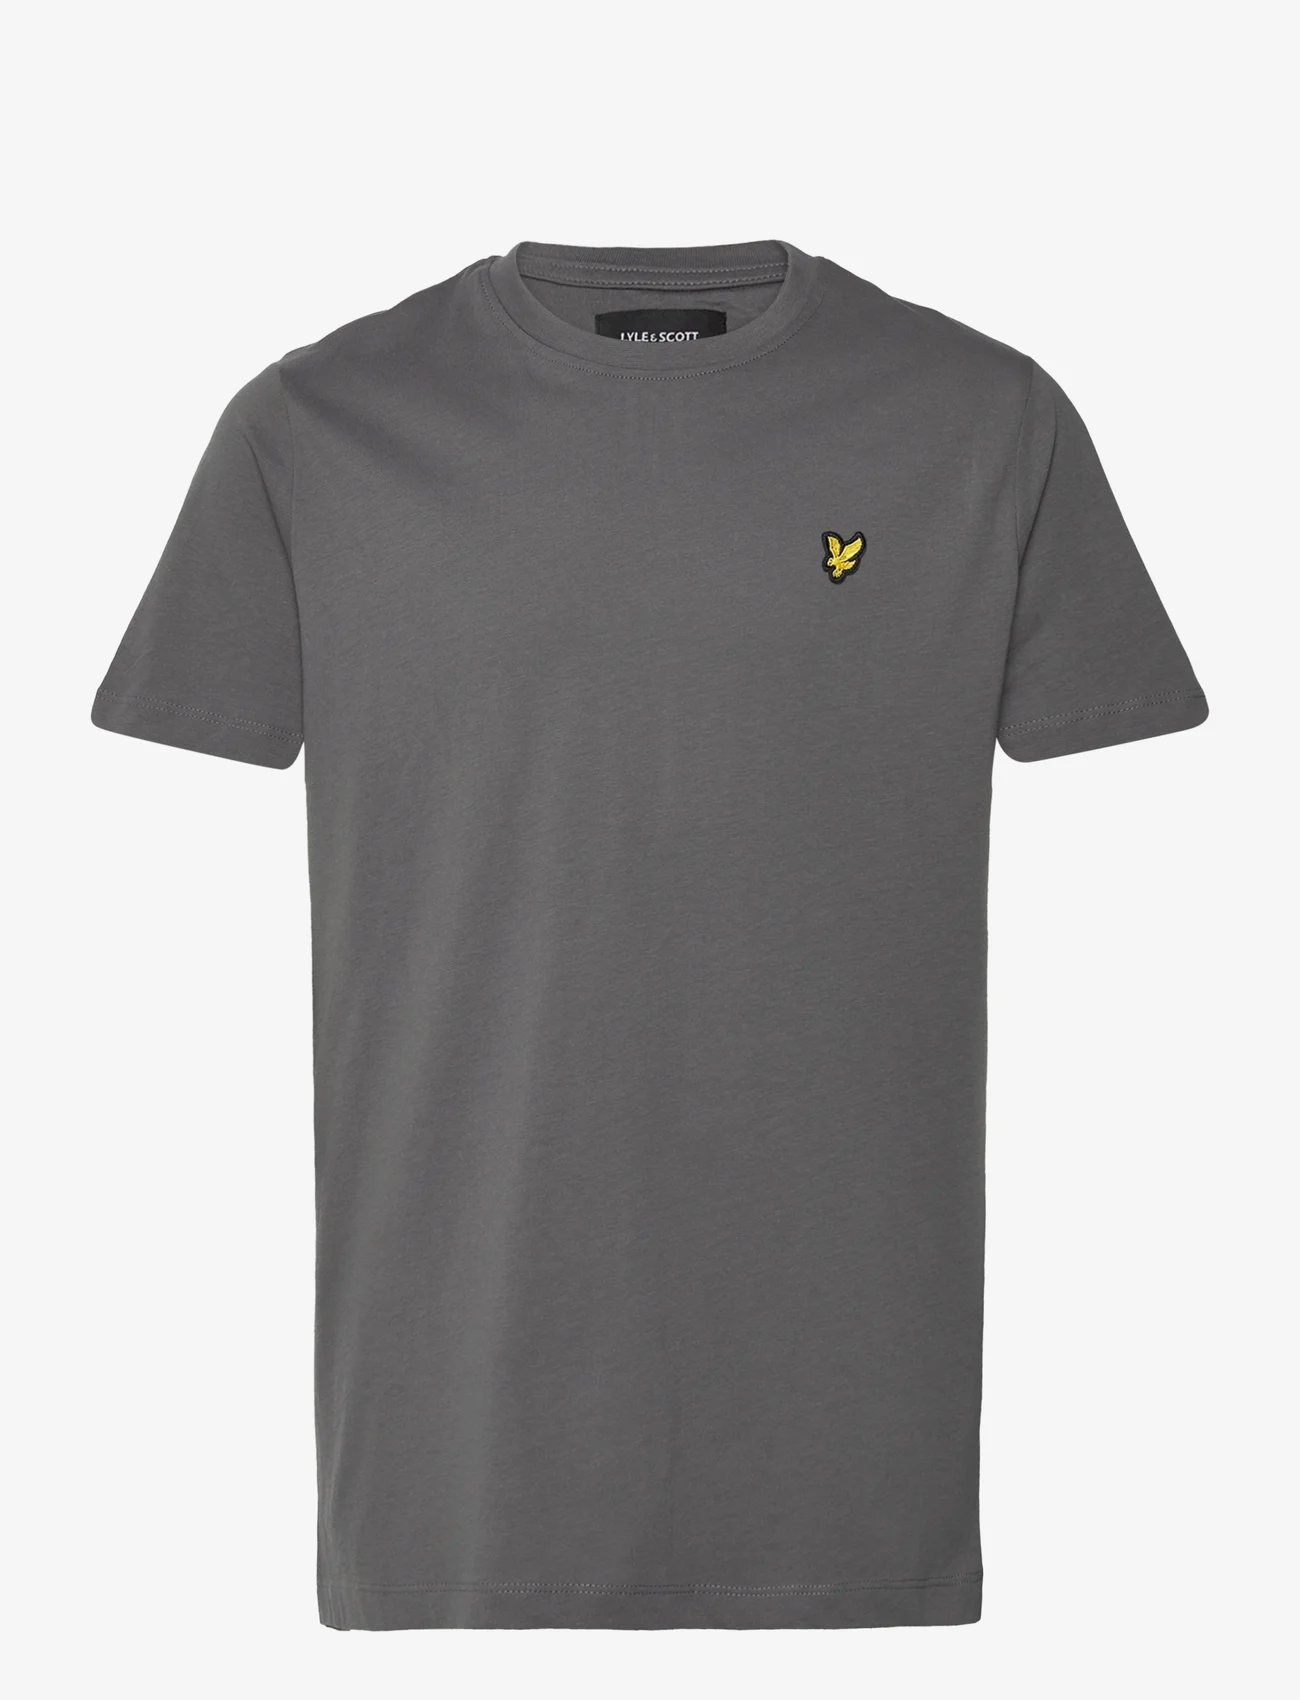 Lyle & Scott Junior - Classic T-Shirt - short-sleeved t-shirts - castlerock - 0